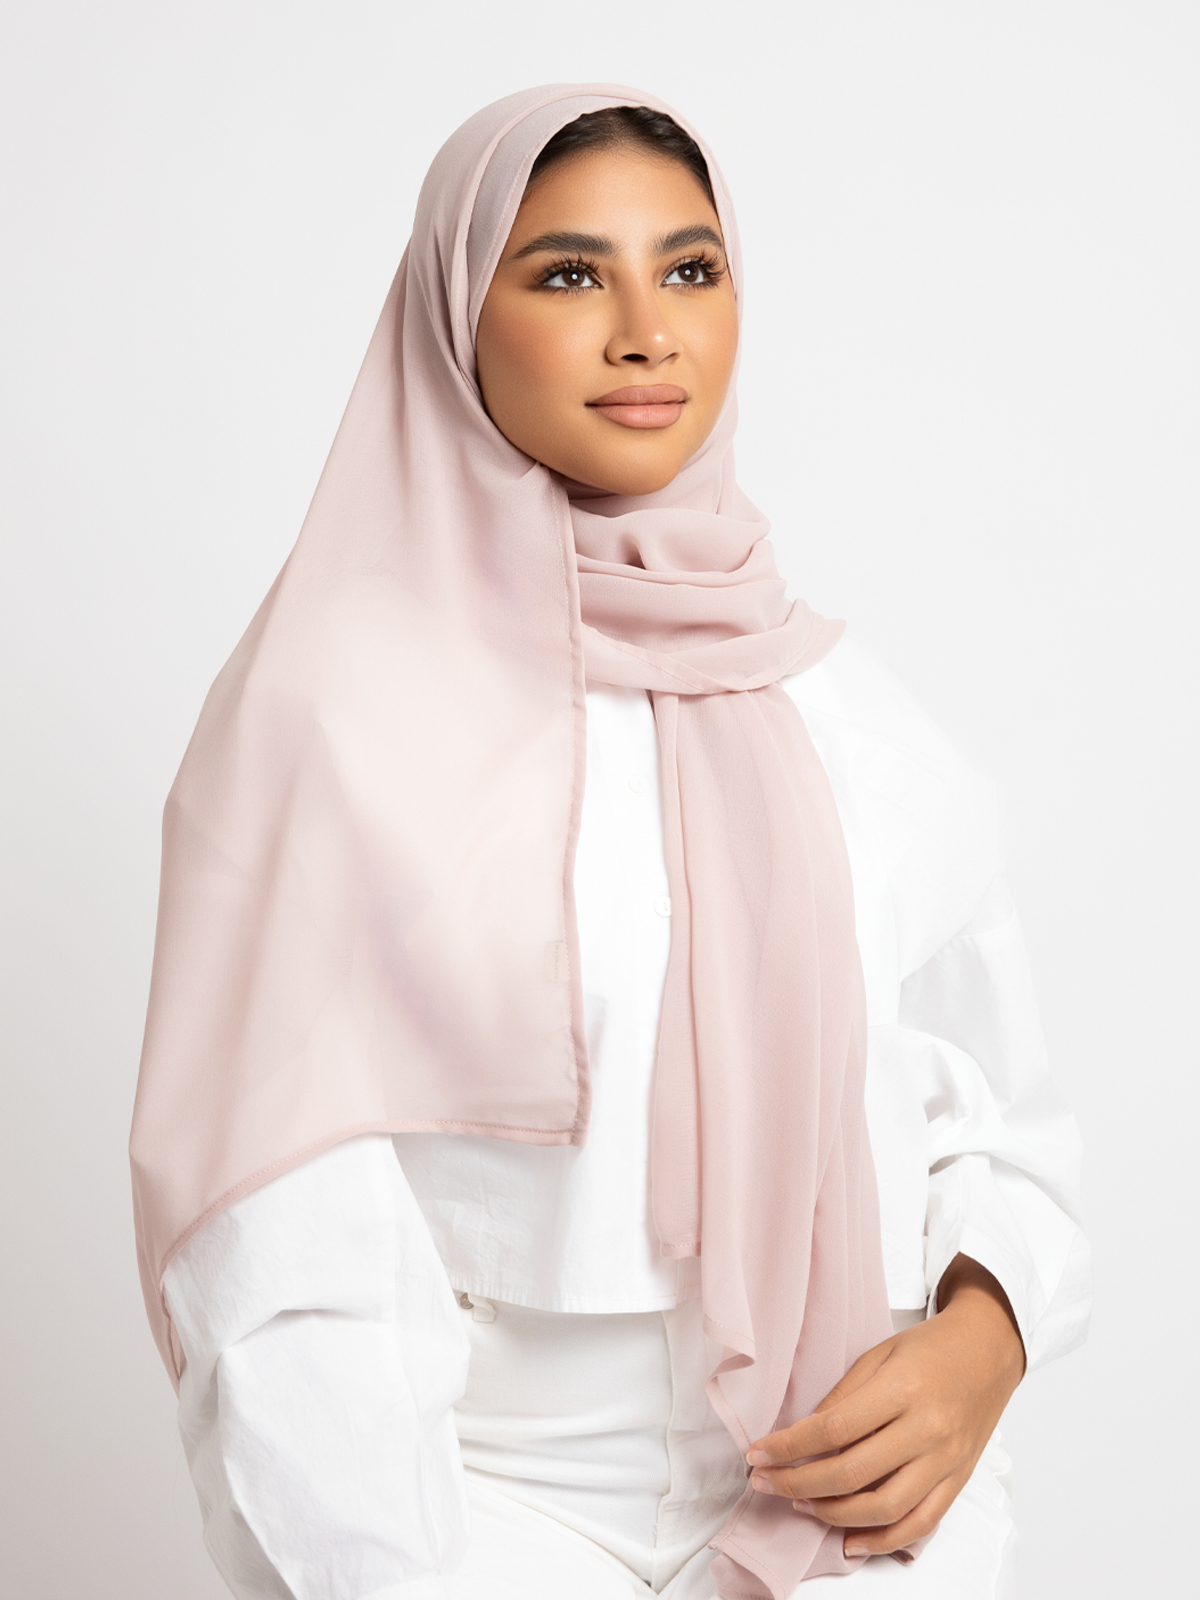 Luxurious chiffon hijab plain tarha 200 cm long pink color high quality material online in ksa by kaafmeem